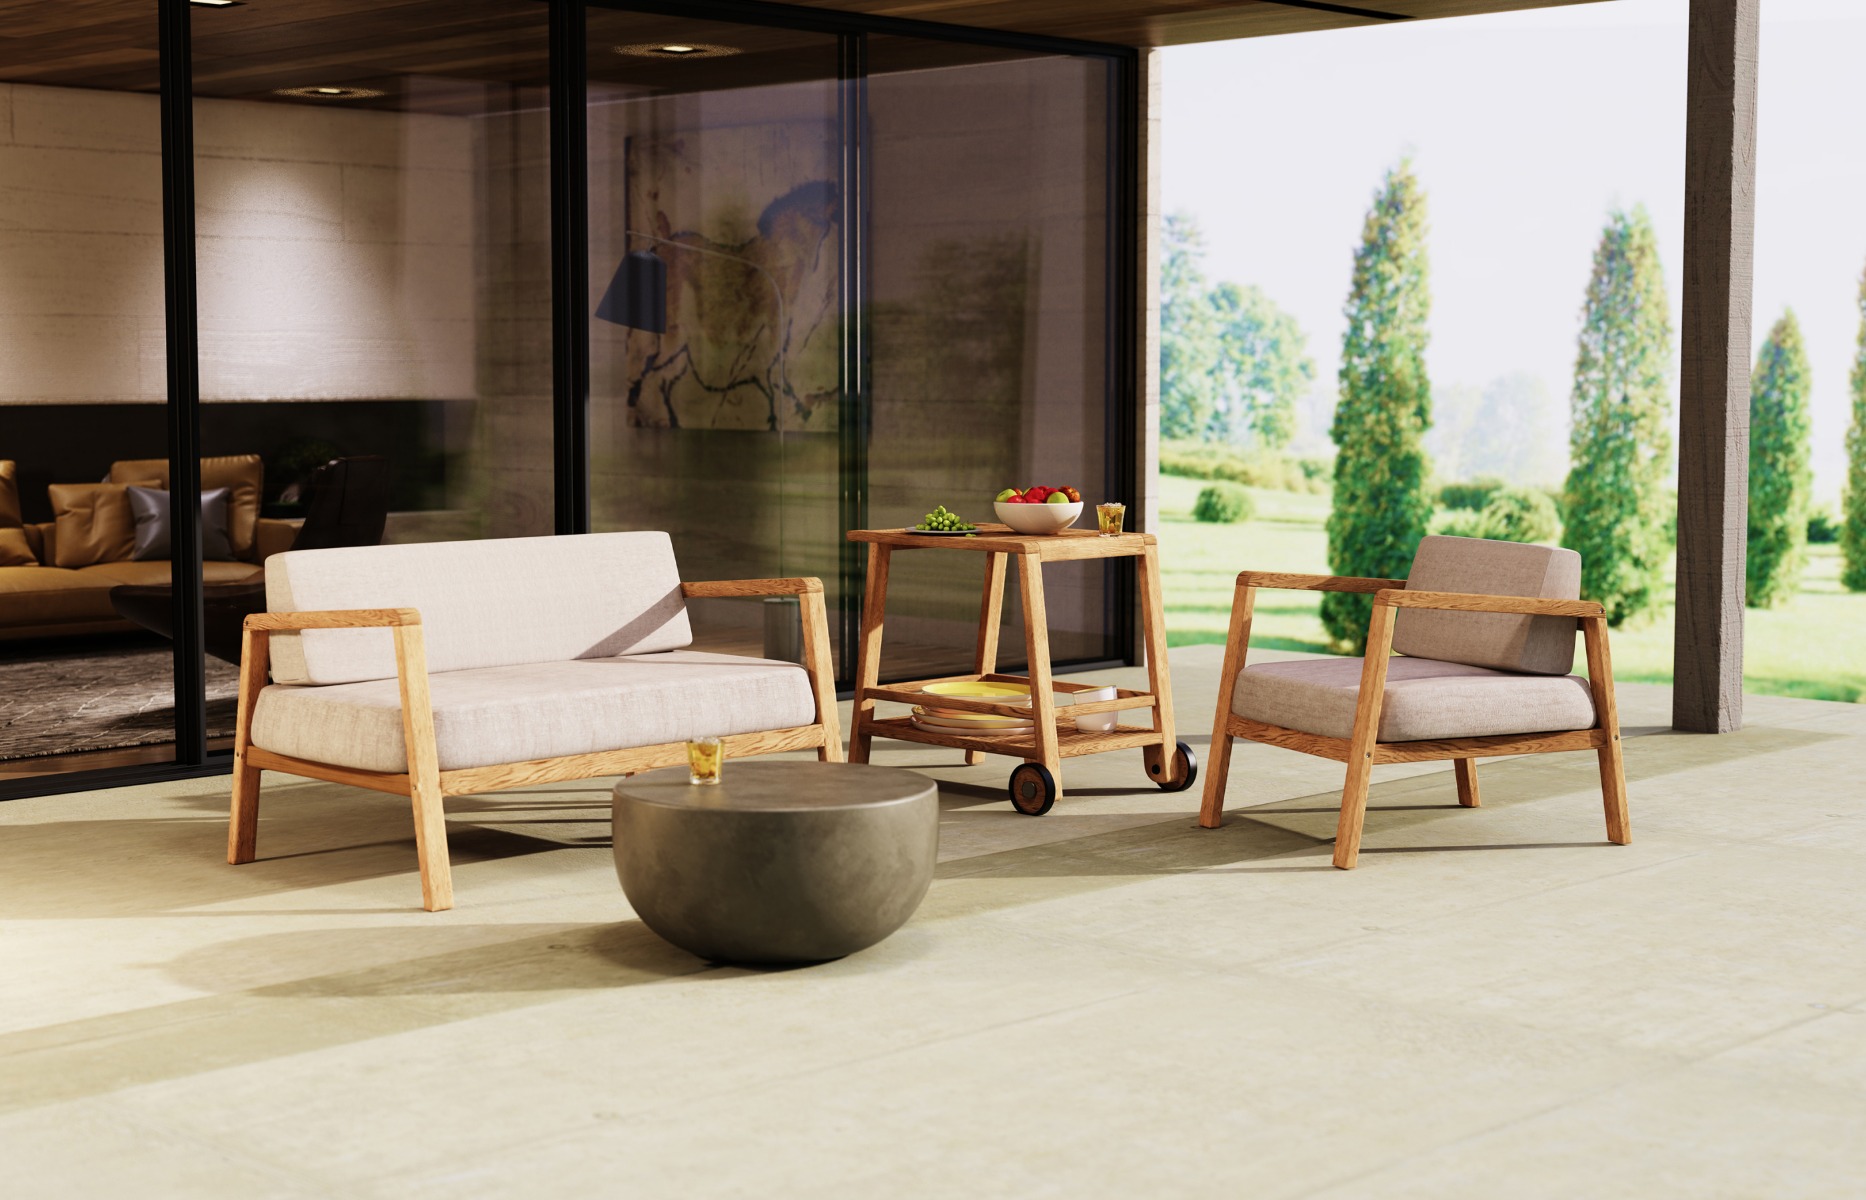 Backyard Getaway Style Furniture from Blinde Design